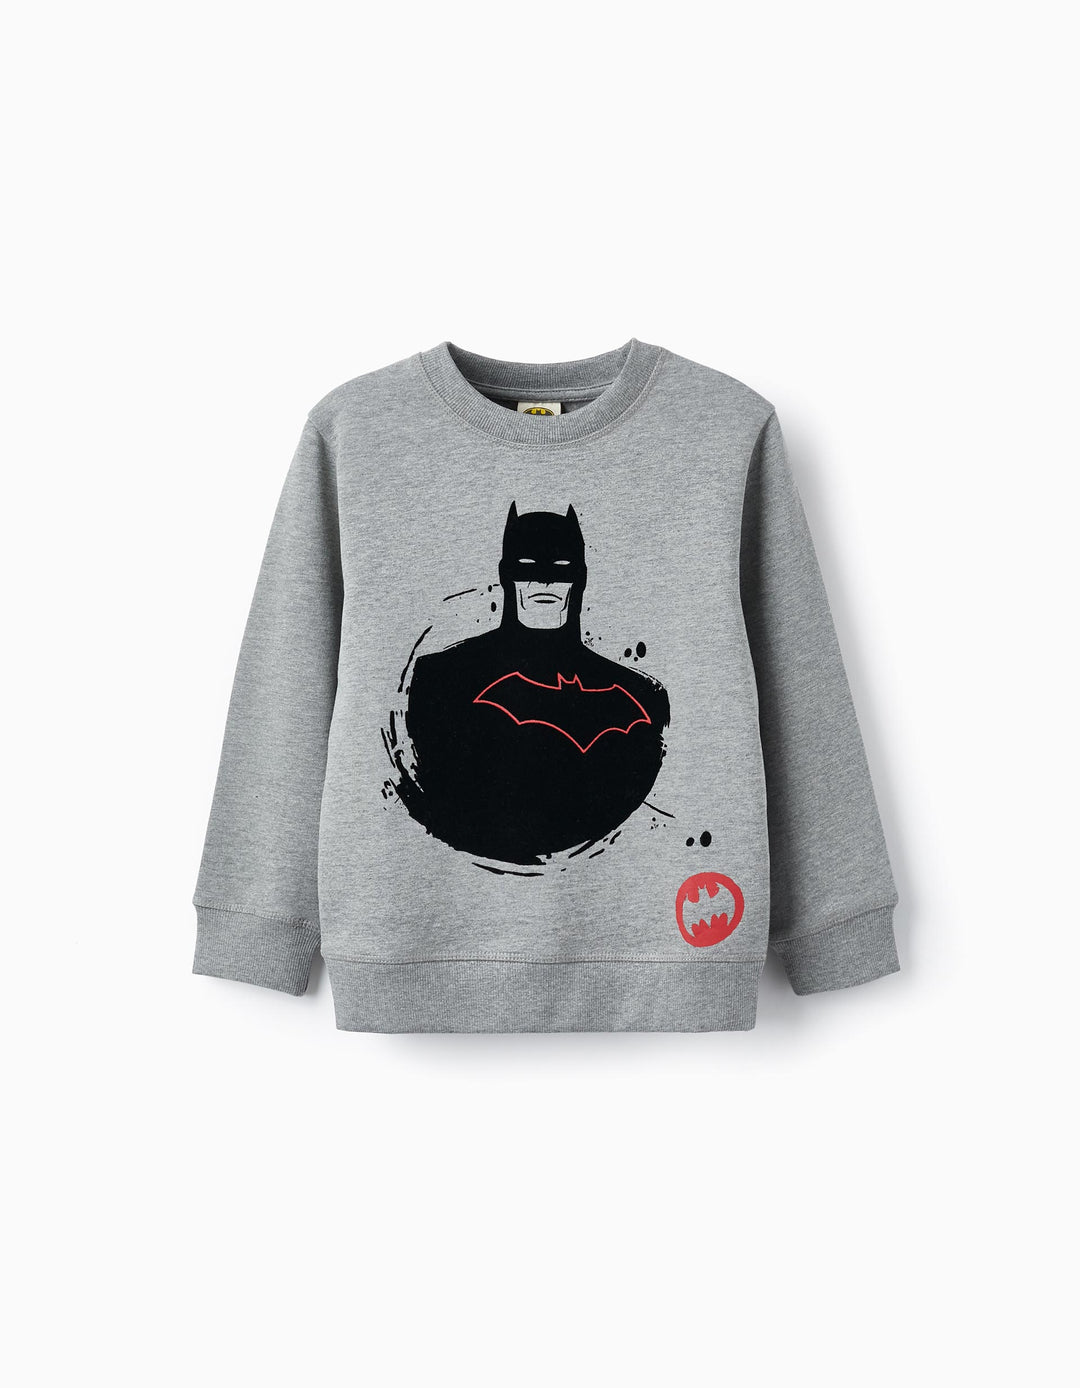 Cotton T-shirt for Boys 'Batman', Grey